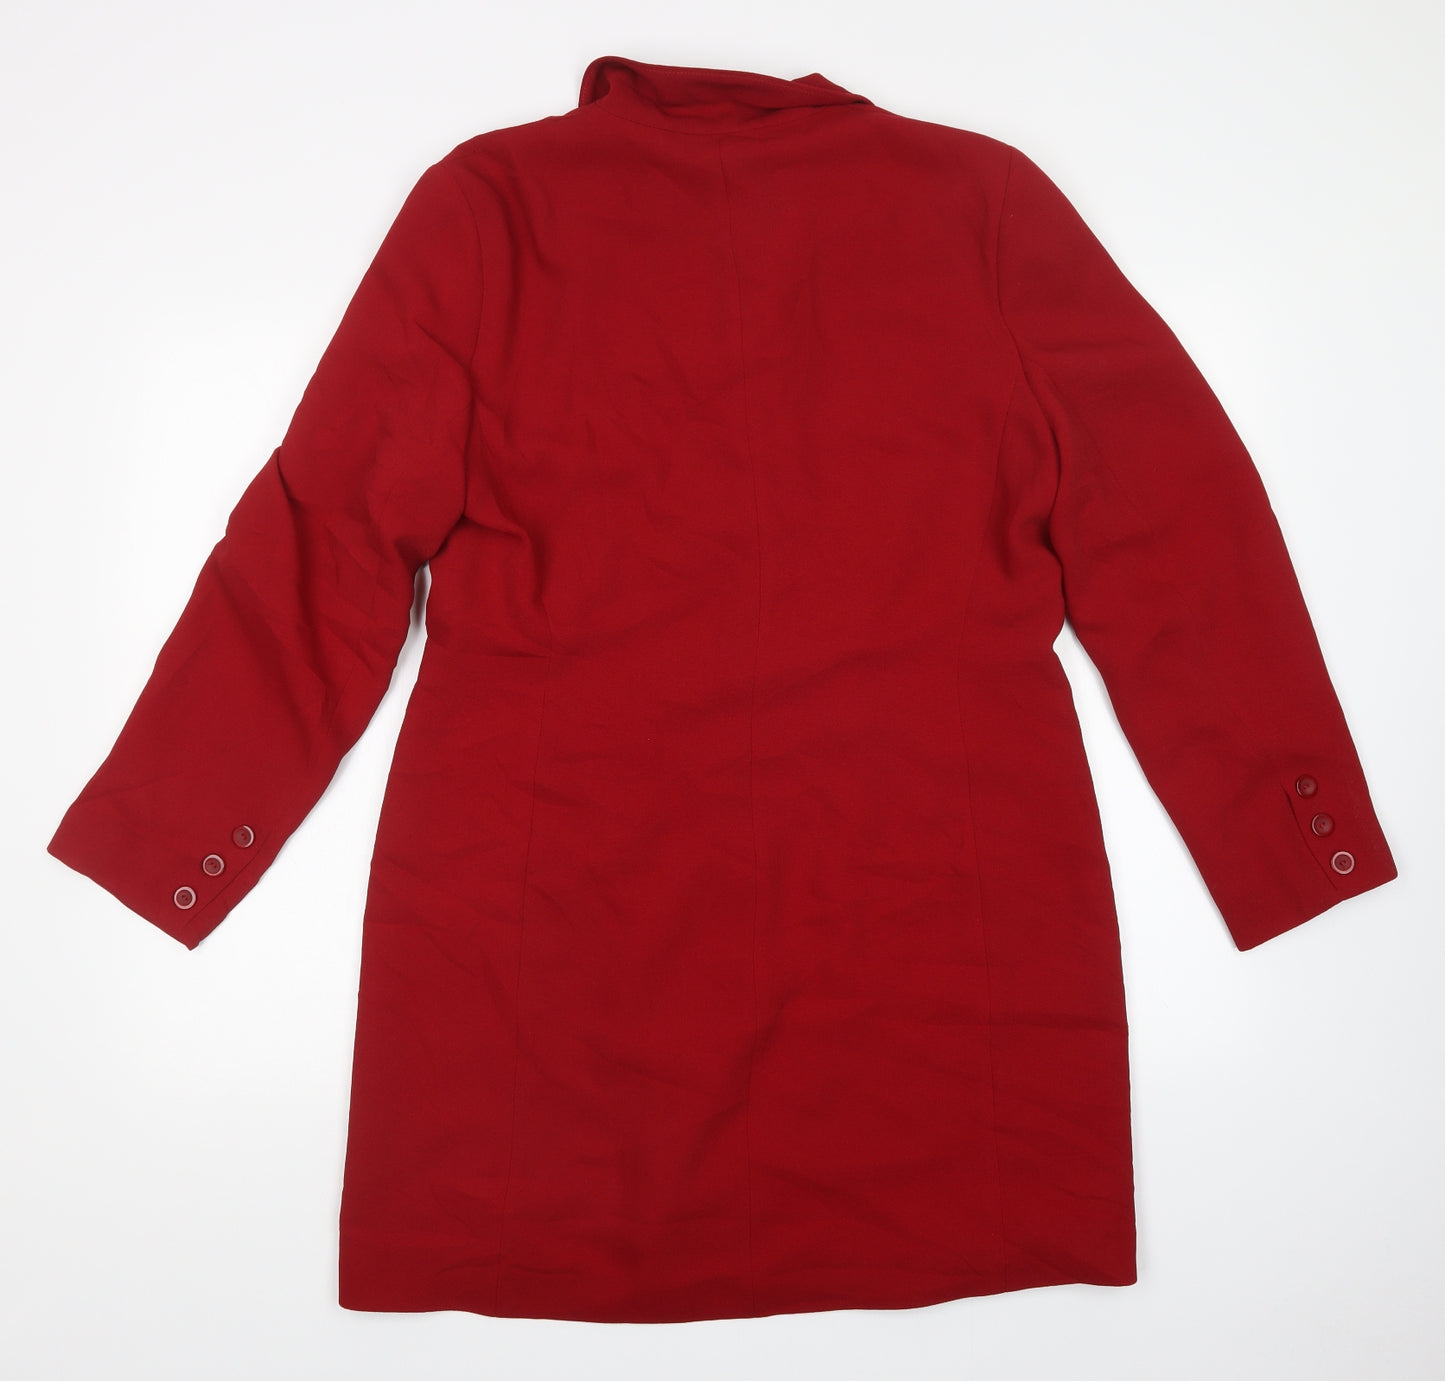 Gina Womens Red   Overcoat Coatigan Size 16